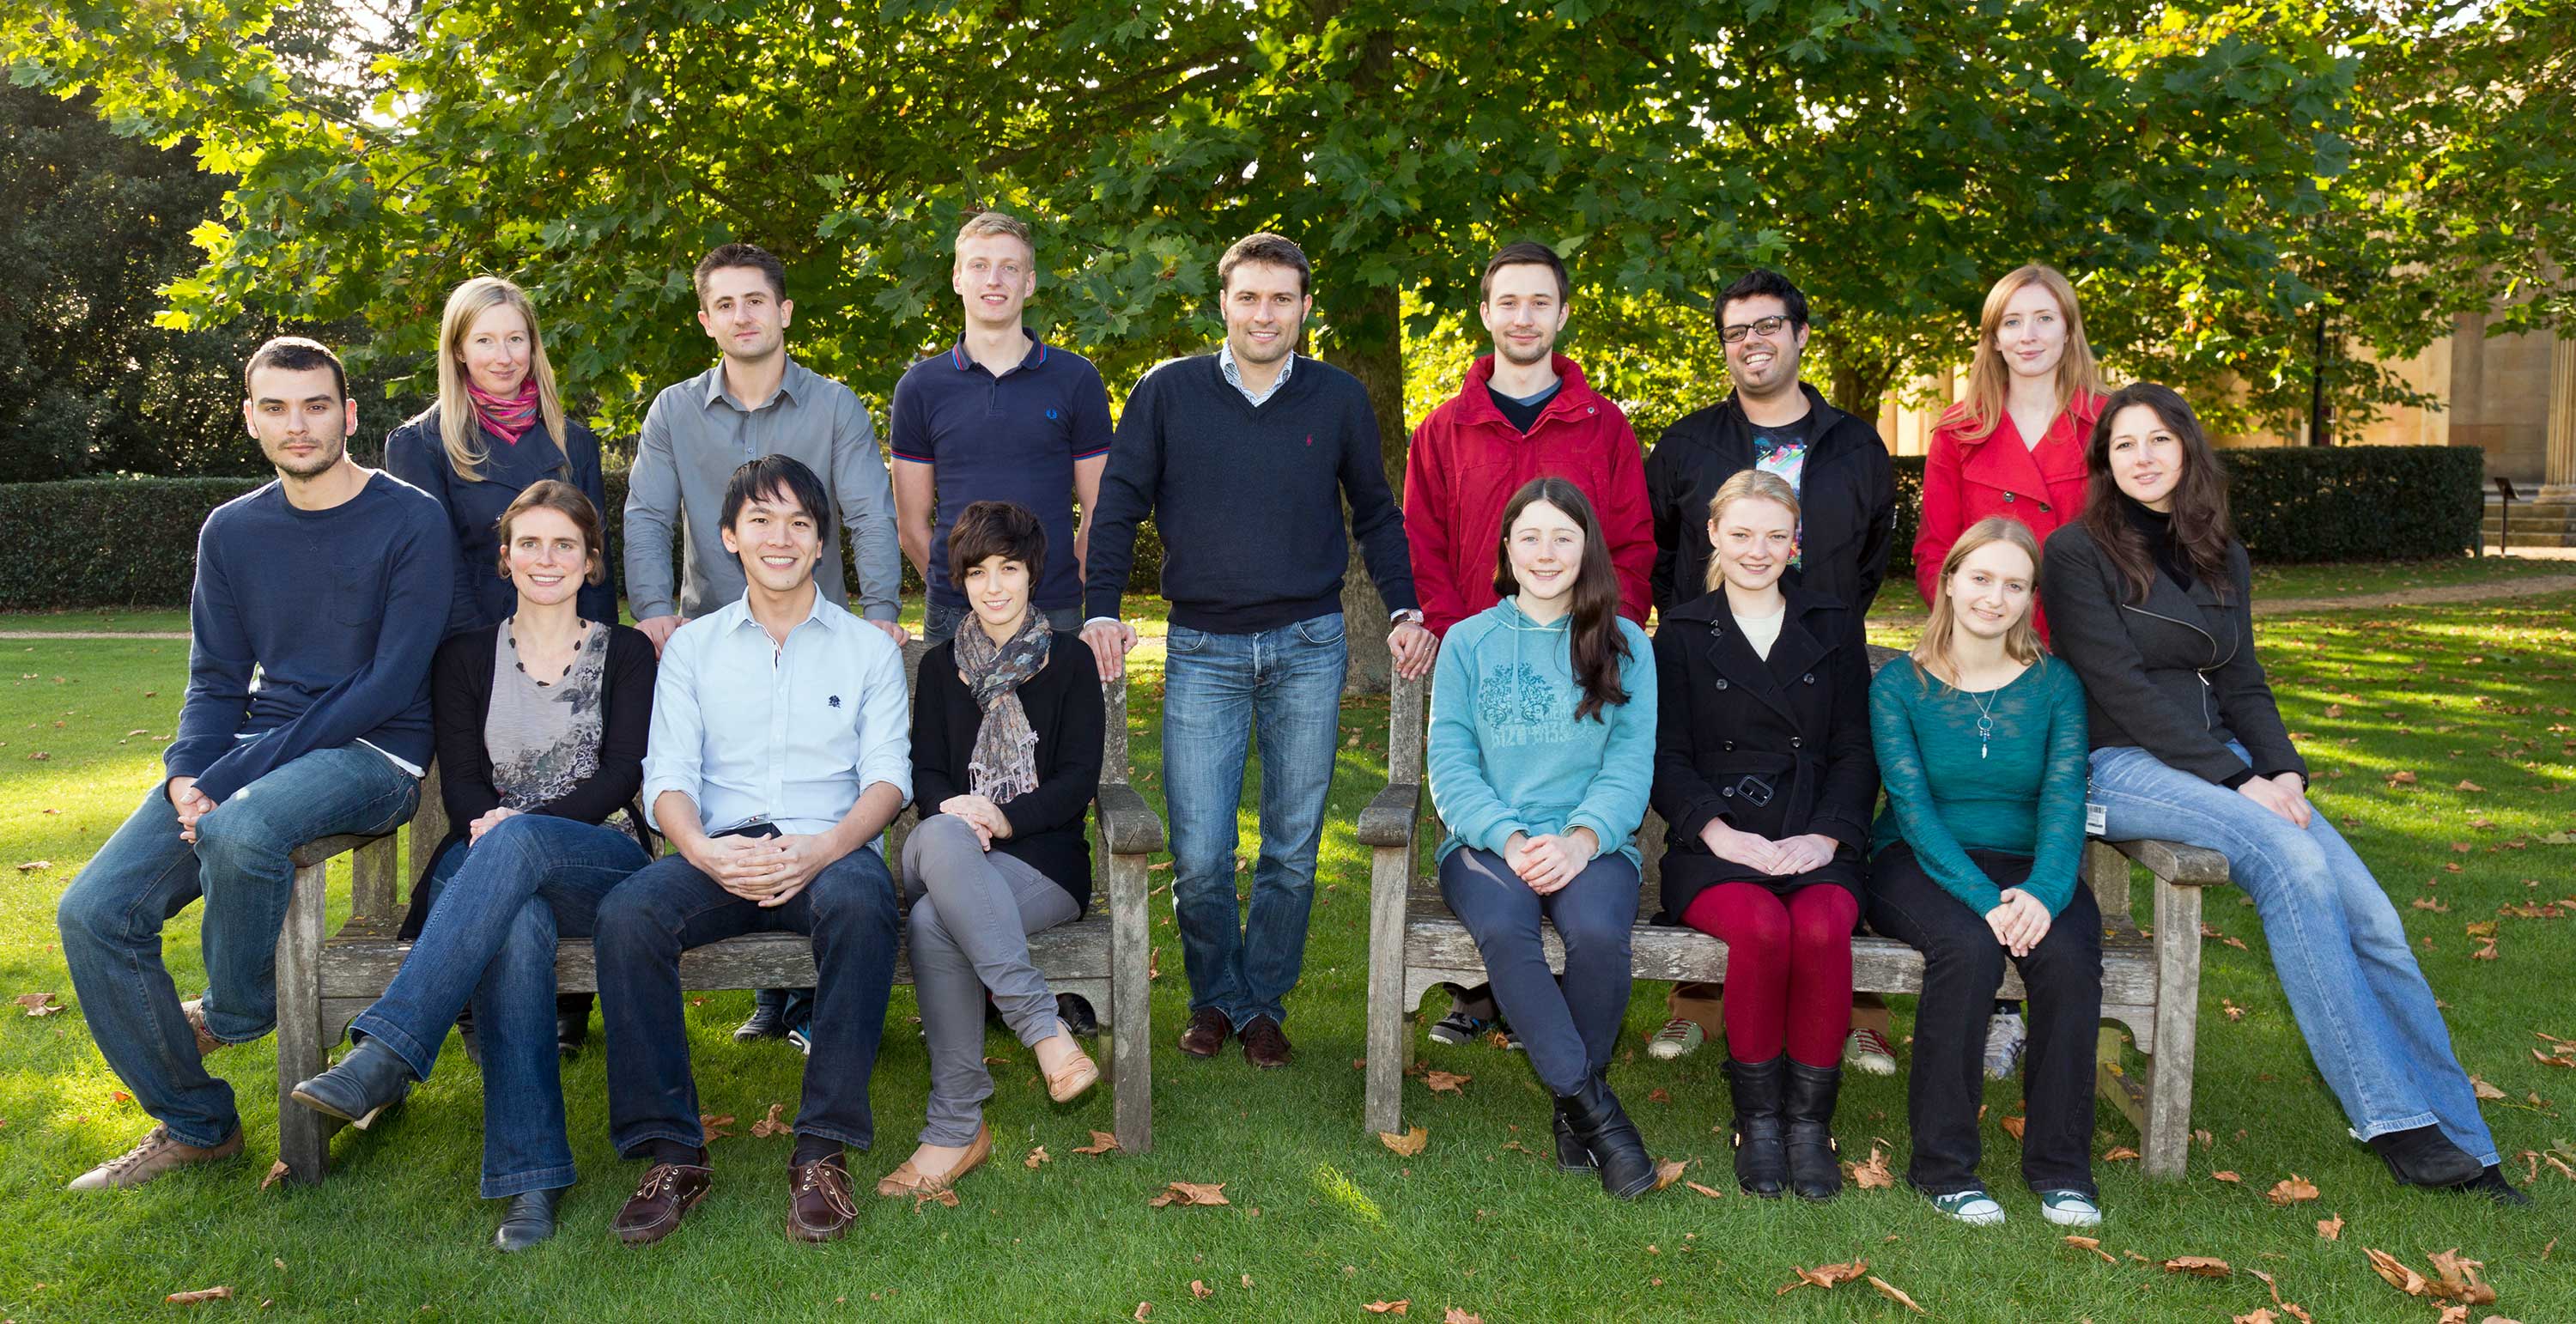 Group photo taken in Cambridge in 2012